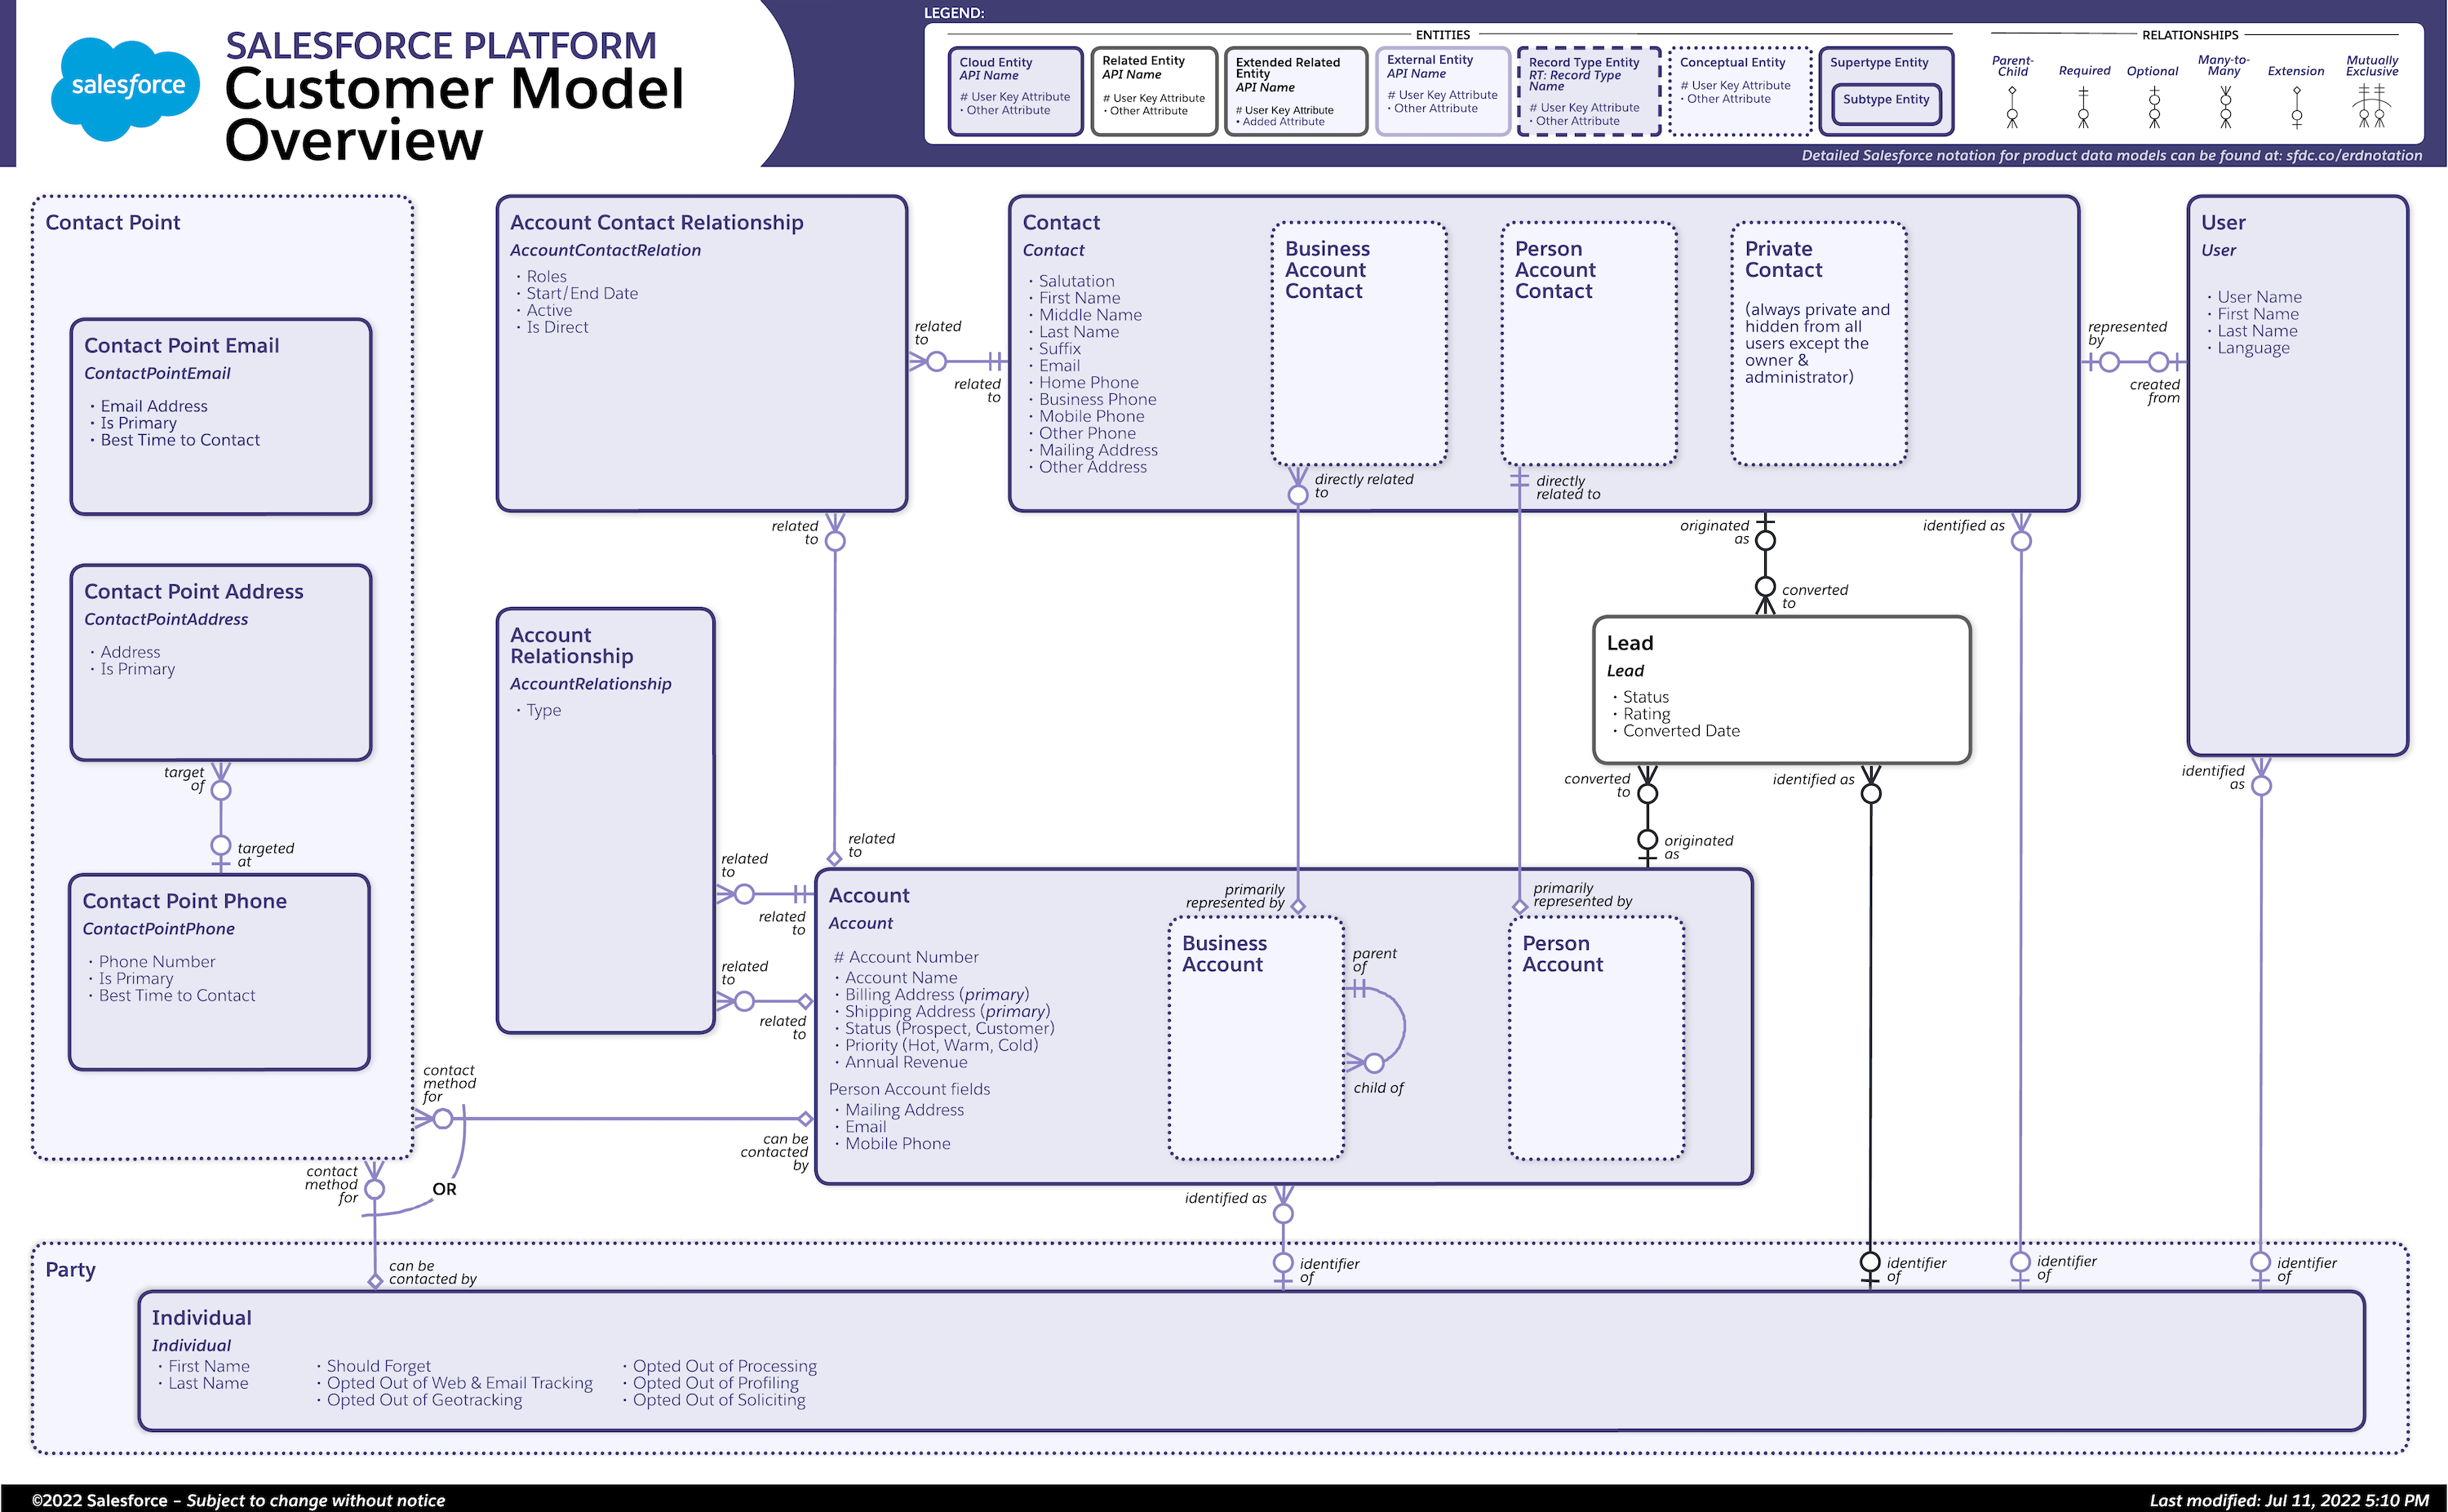 Customer Model Overview